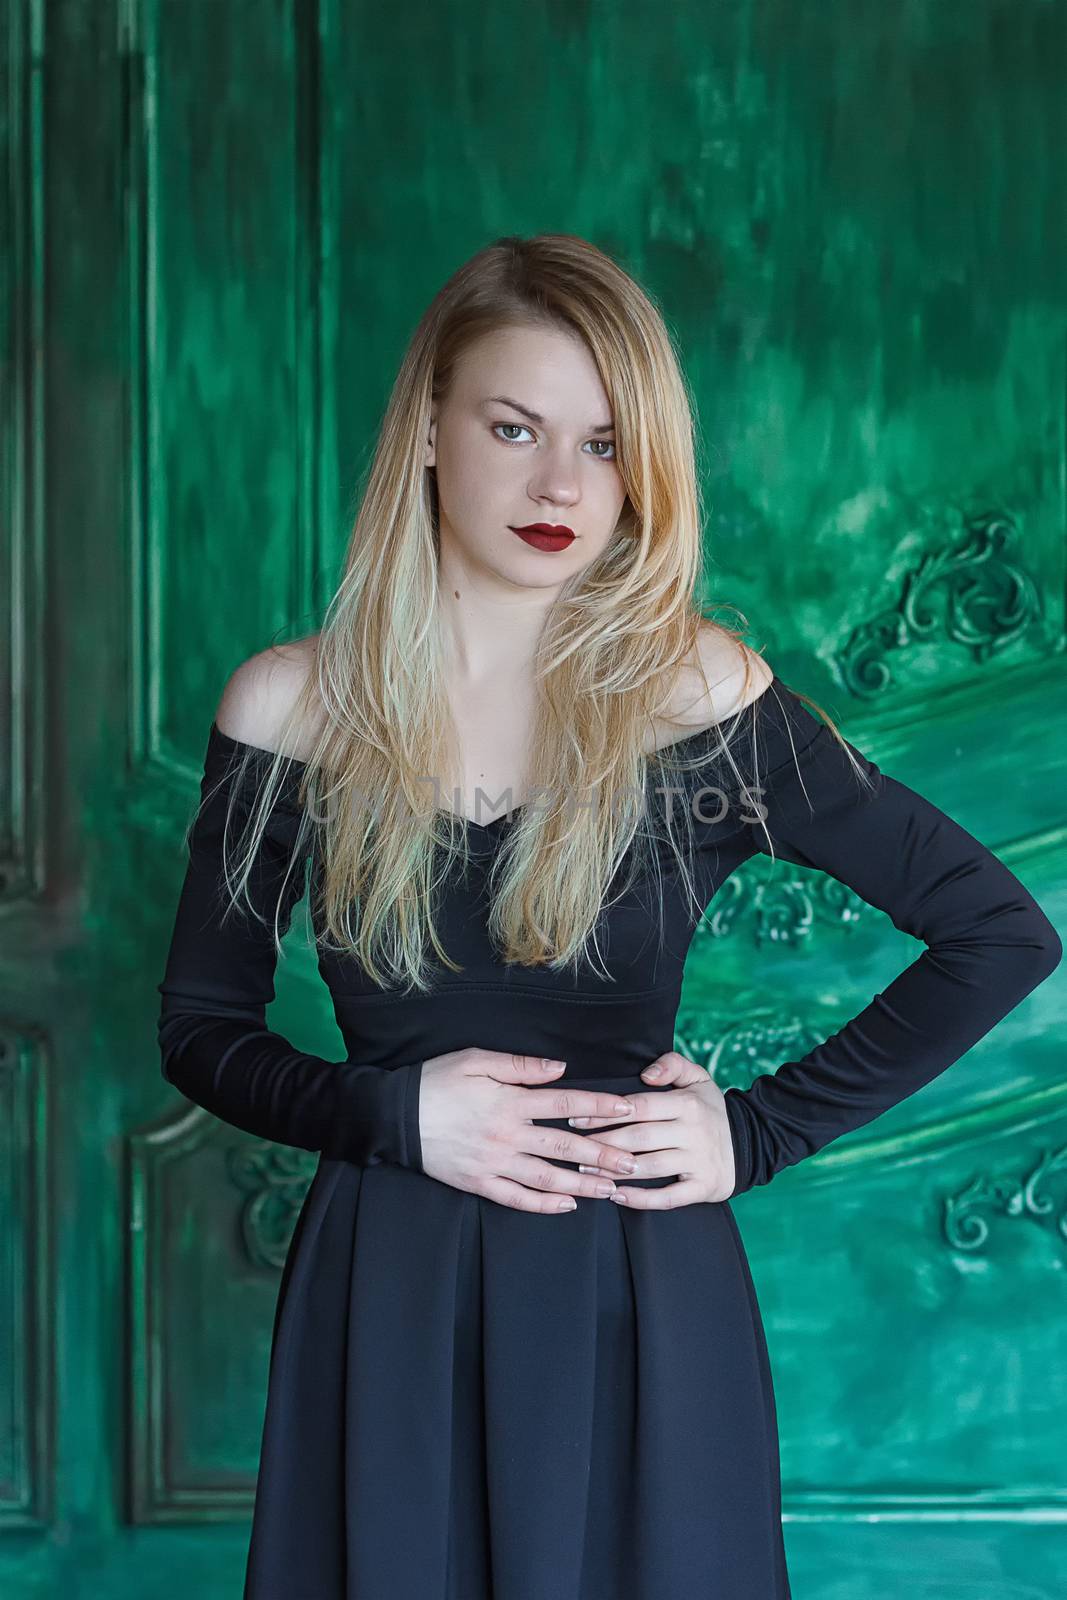 Elegant blonde in a black dress near grunge wall by victosha